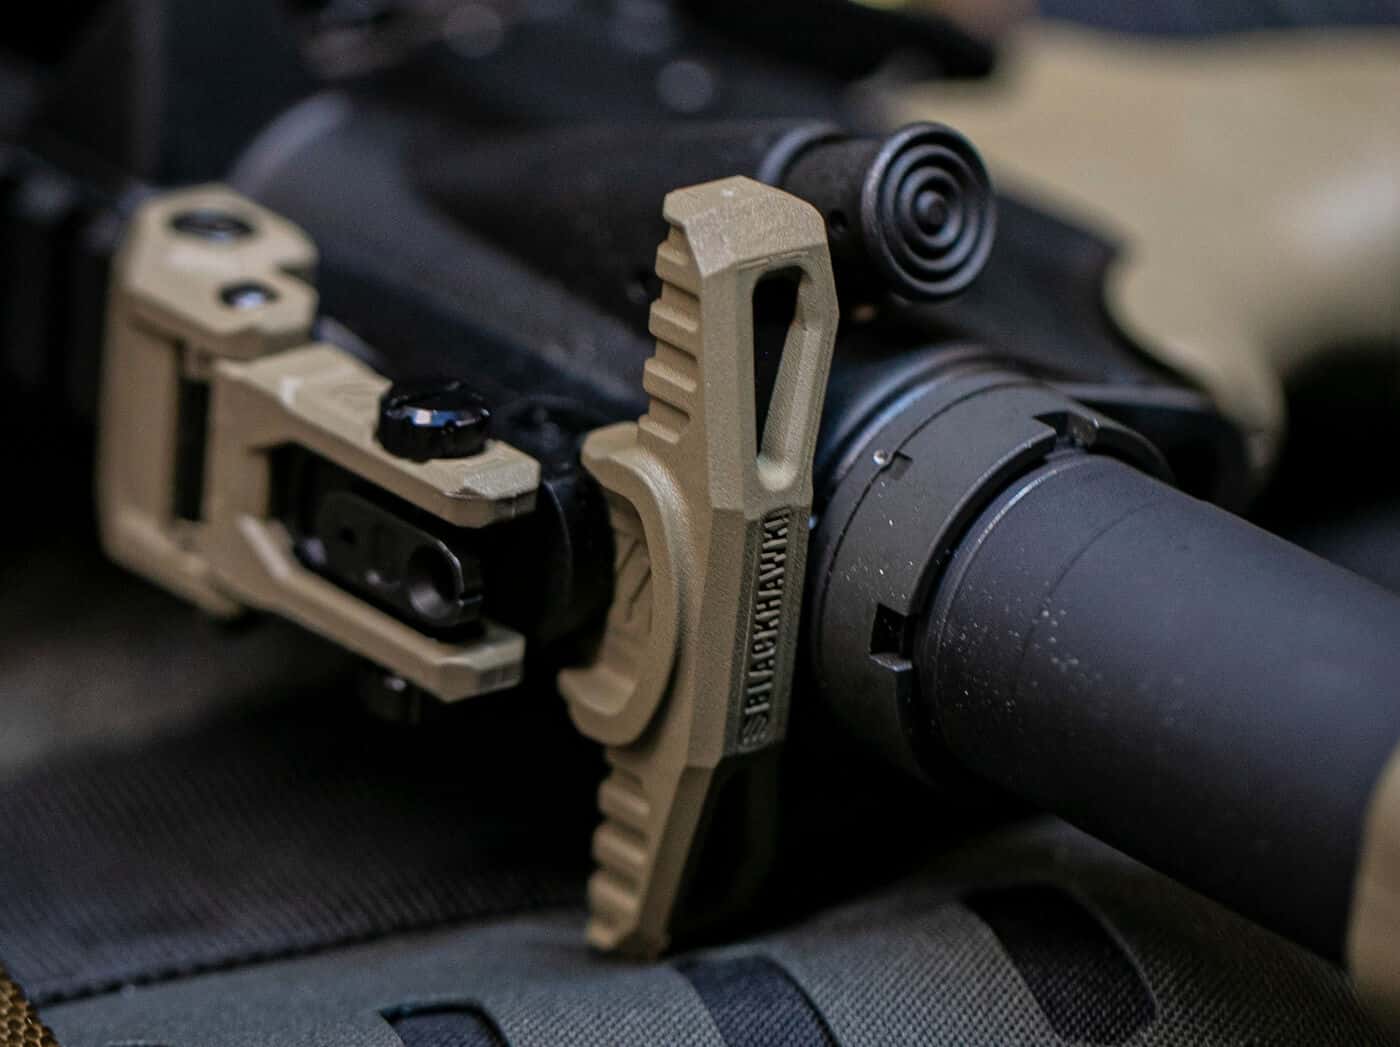 Blackhawk M9 Pistol Drop Leg Holster, With Optics Hood [Venture Surplus]